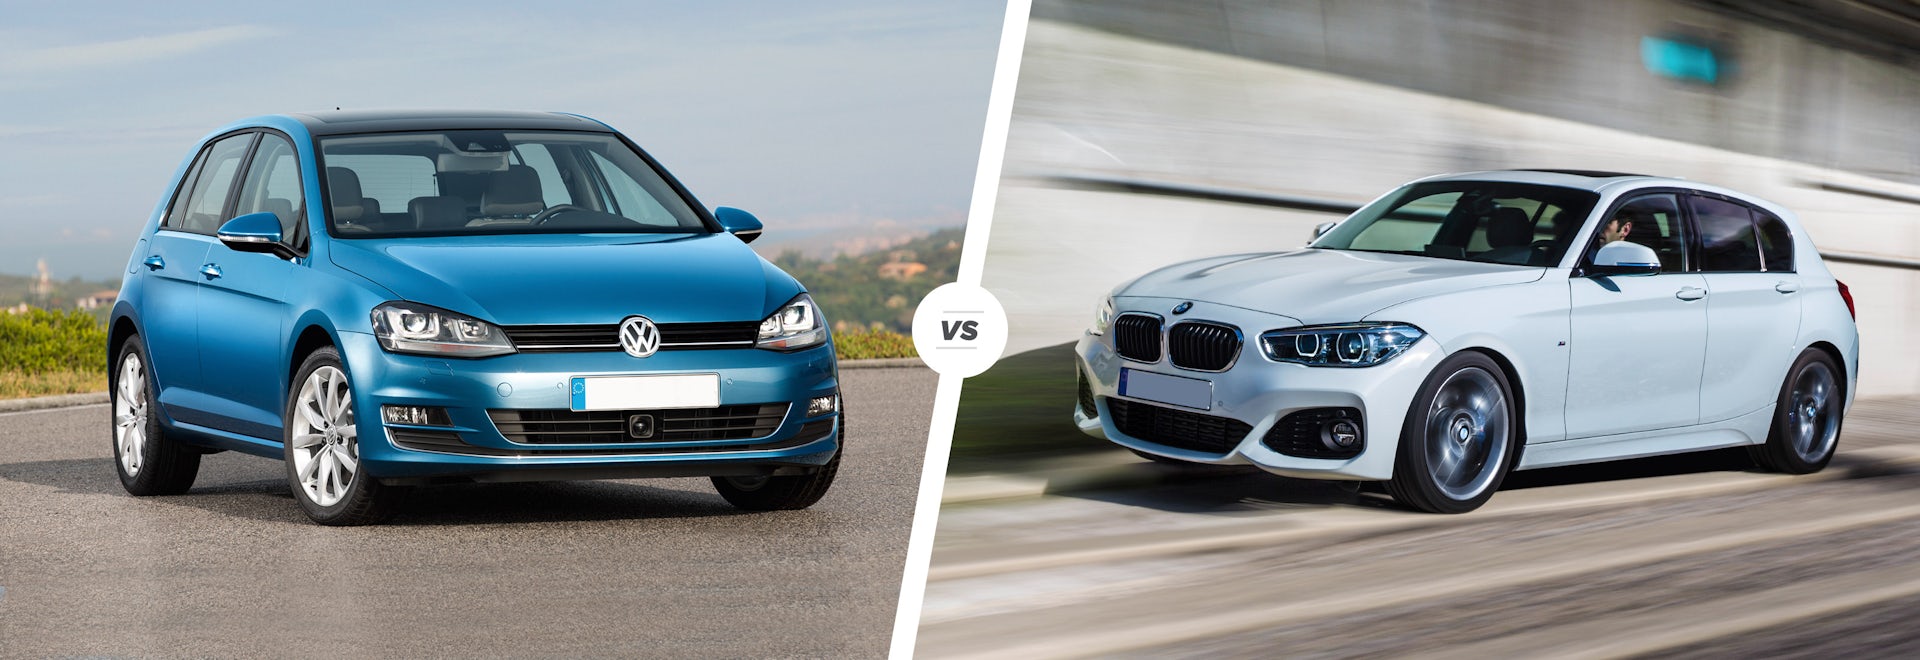 VW Golf vs BMW 1 Series premium hatch battle carwow